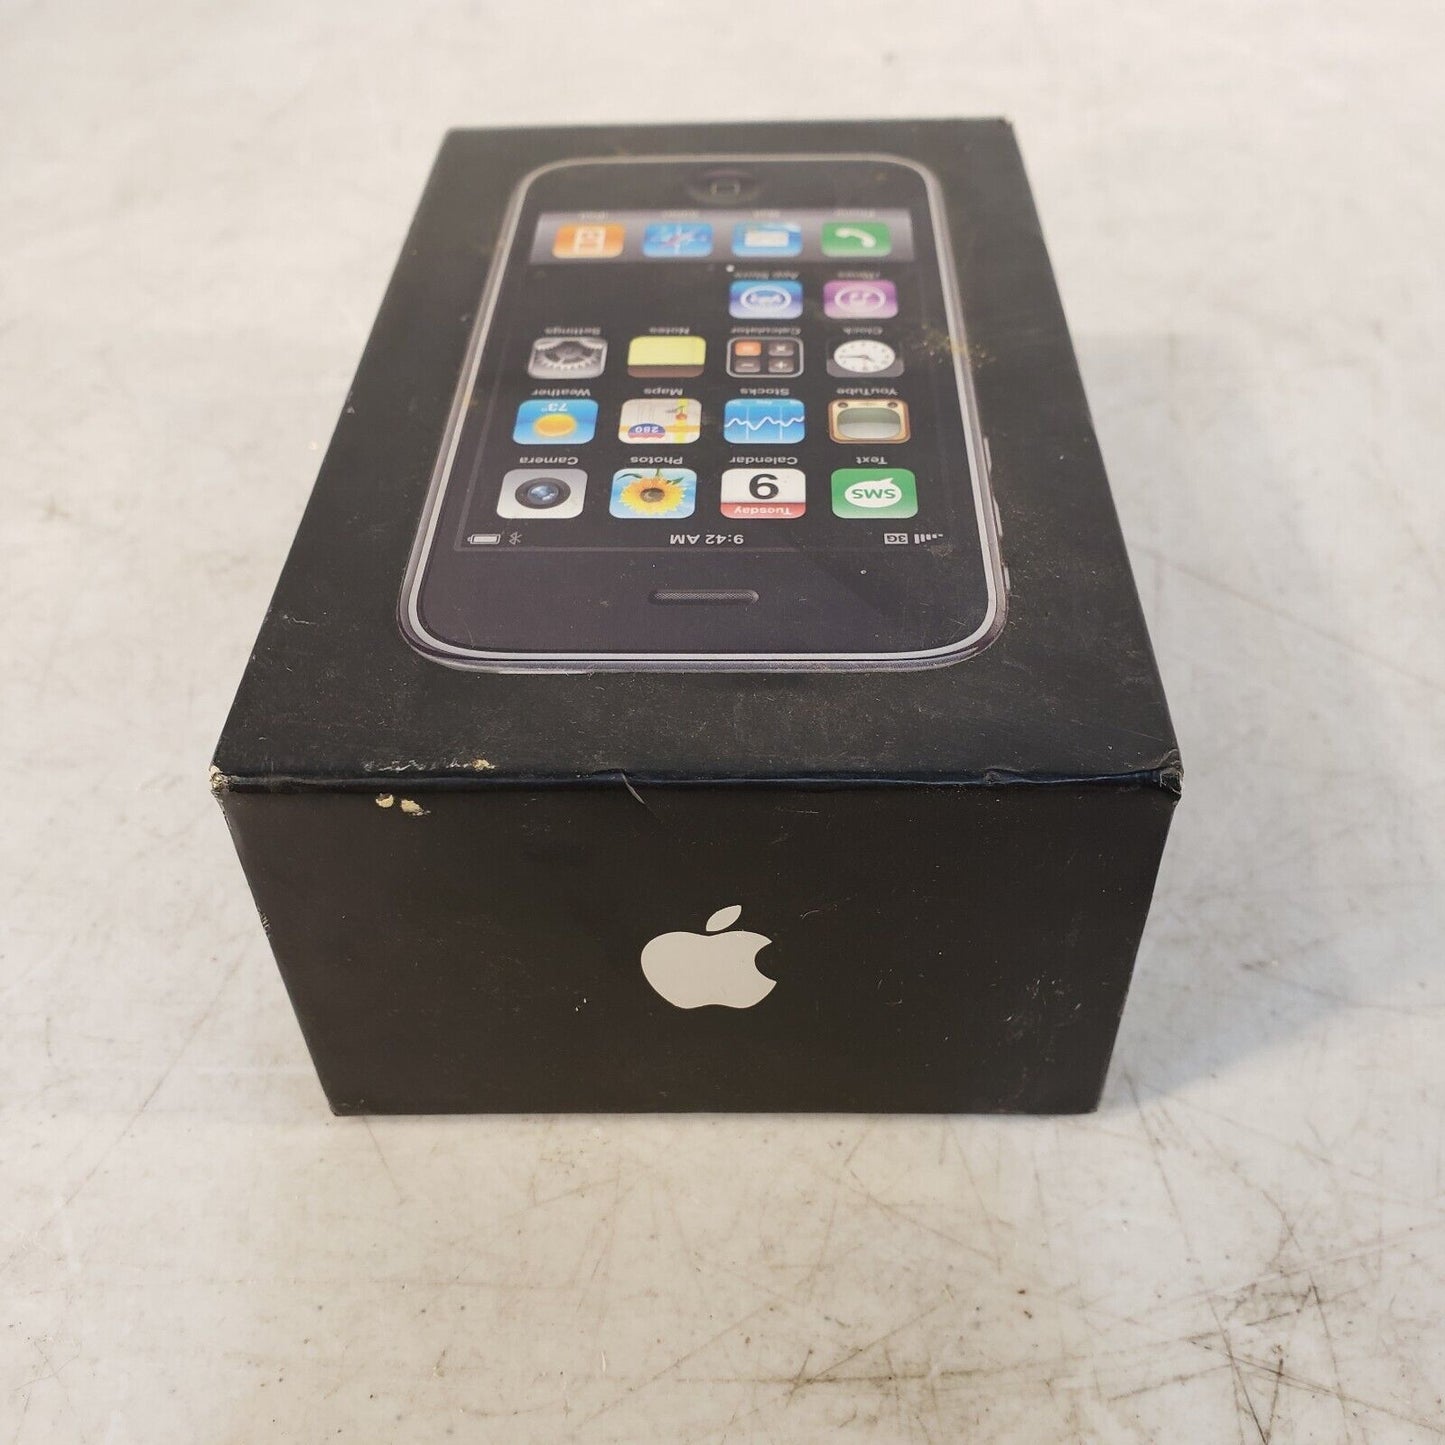 *BOX ONLY* Apple iPhone 3G Black, 16GB Vintage Original iPhone Box MB704LL/A